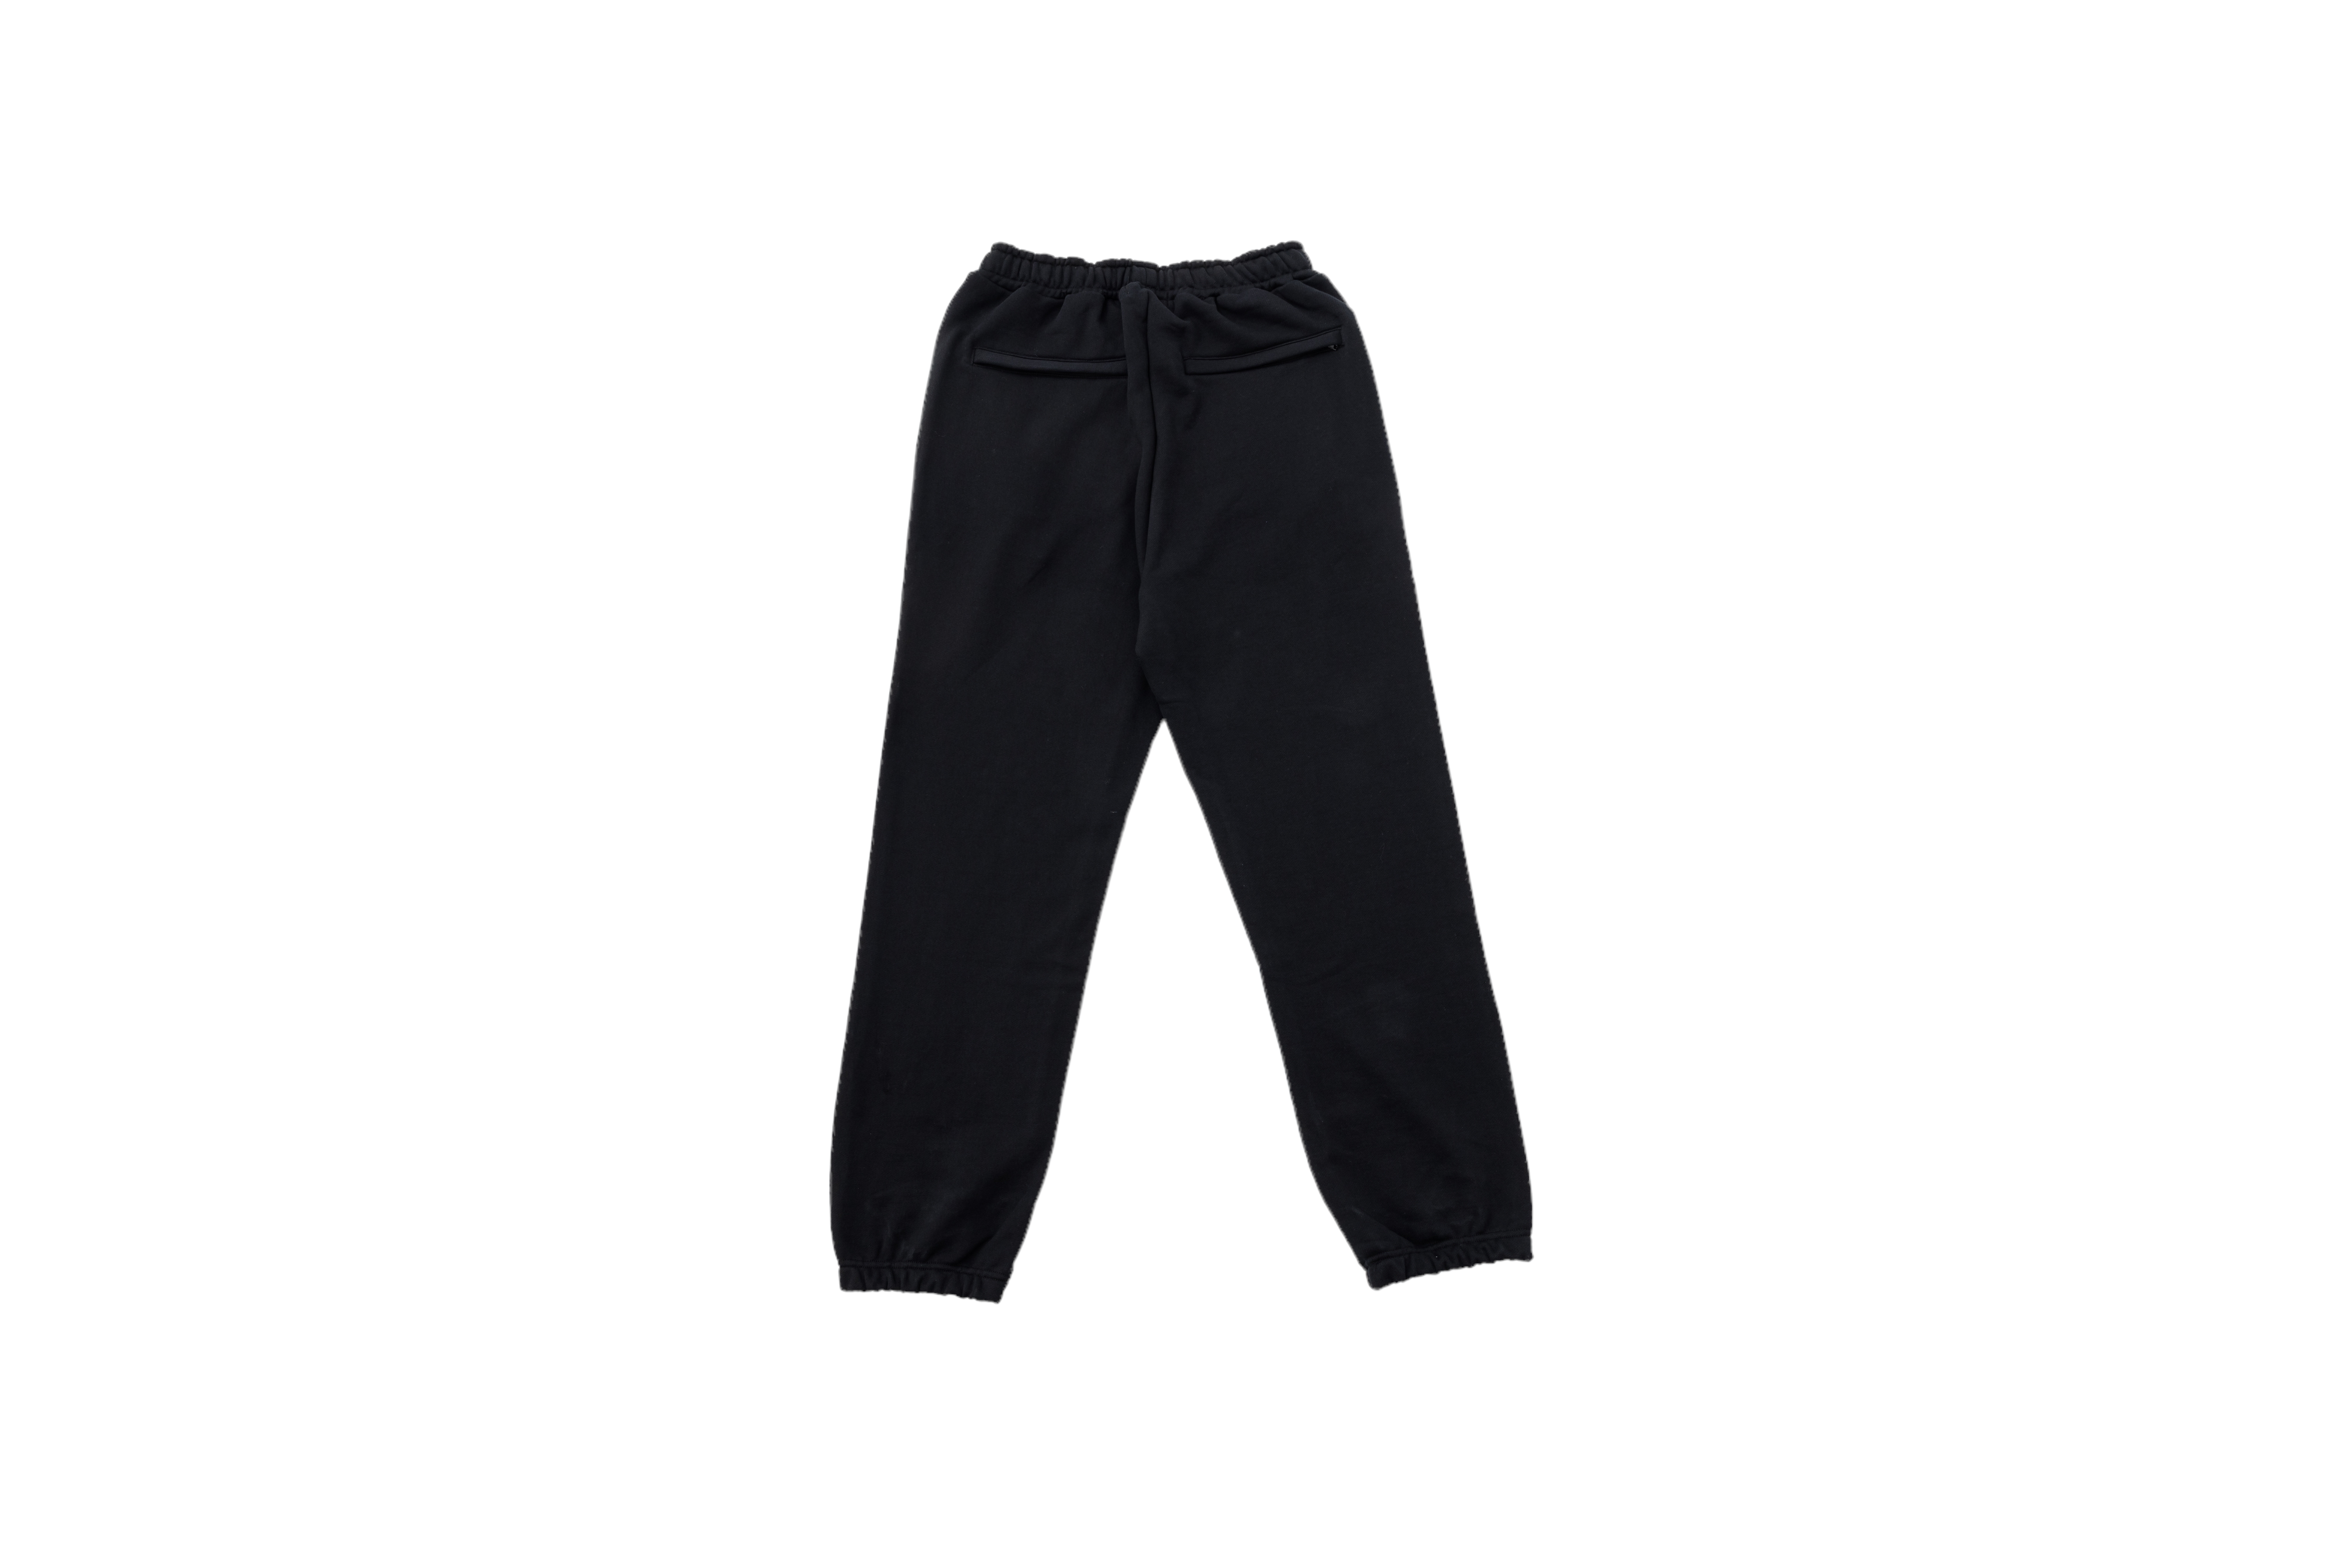 Low Crotch Sweatpants w/ Logo - Black